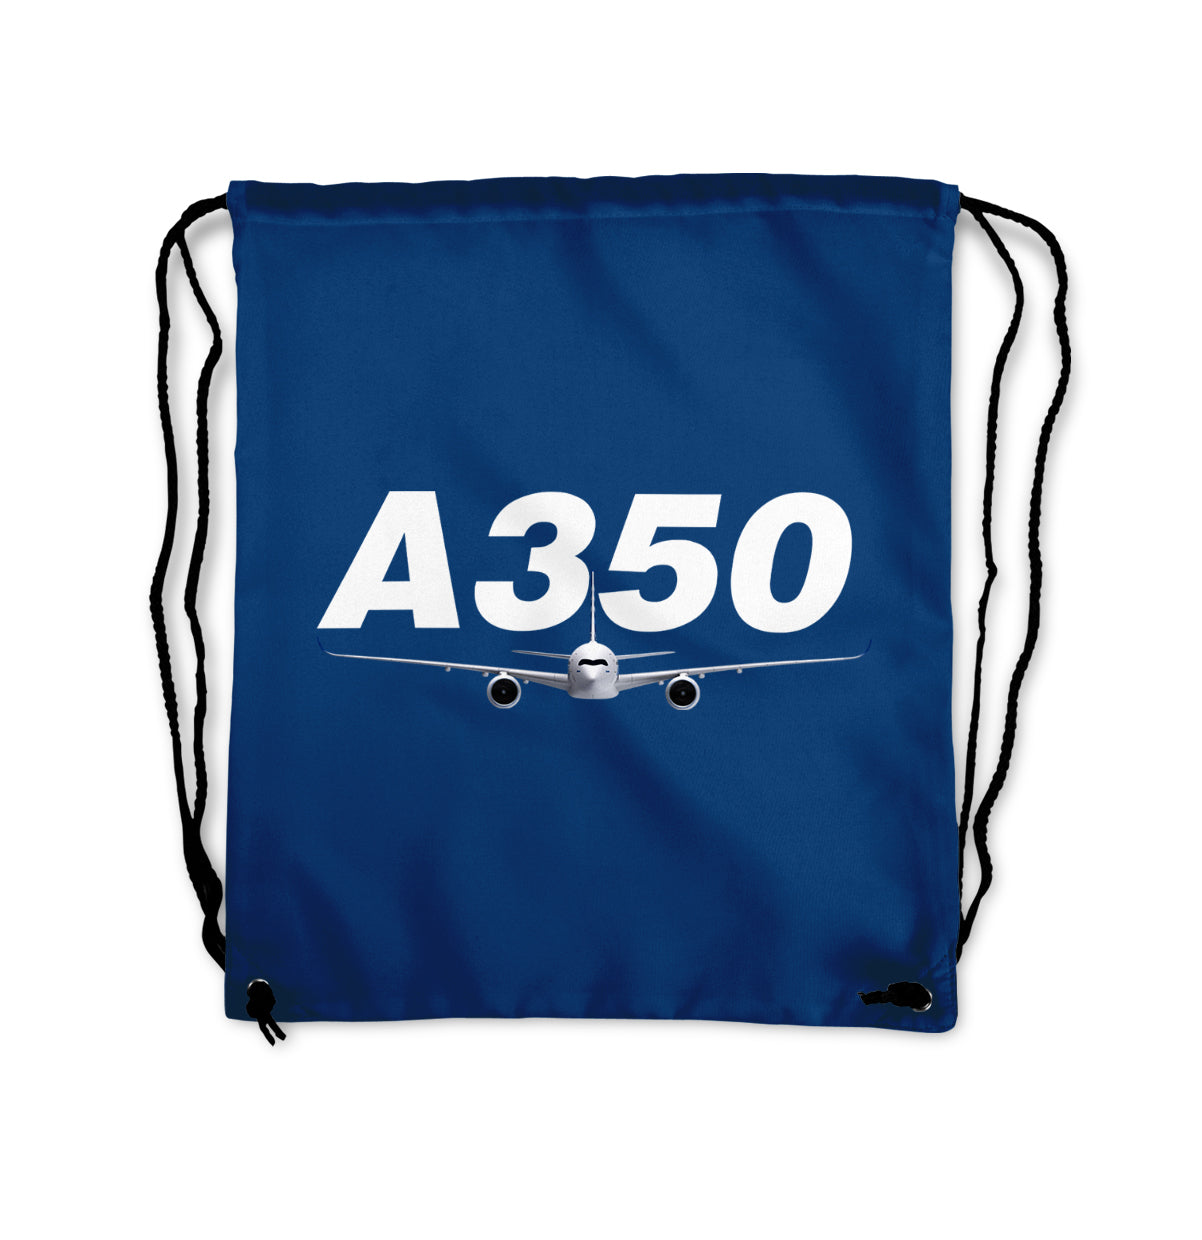 Super Airbus A350 Designed Drawstring Bags